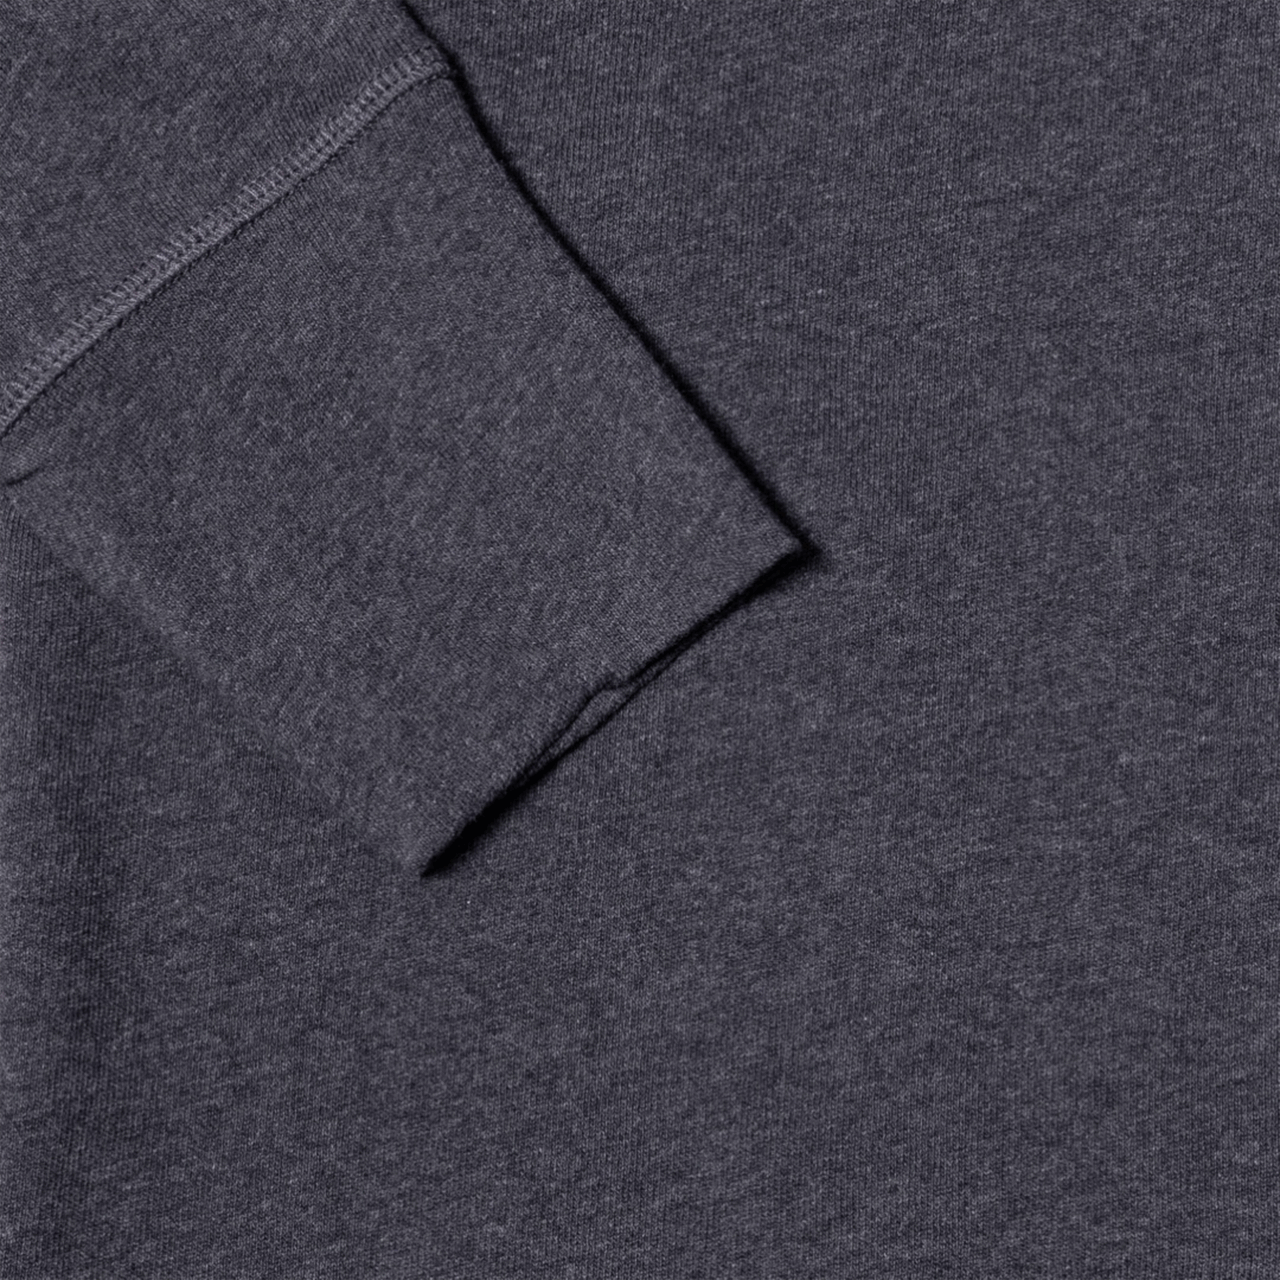 Pike Brothers 1927 Henley Shirt Long Sleeve - iron grey